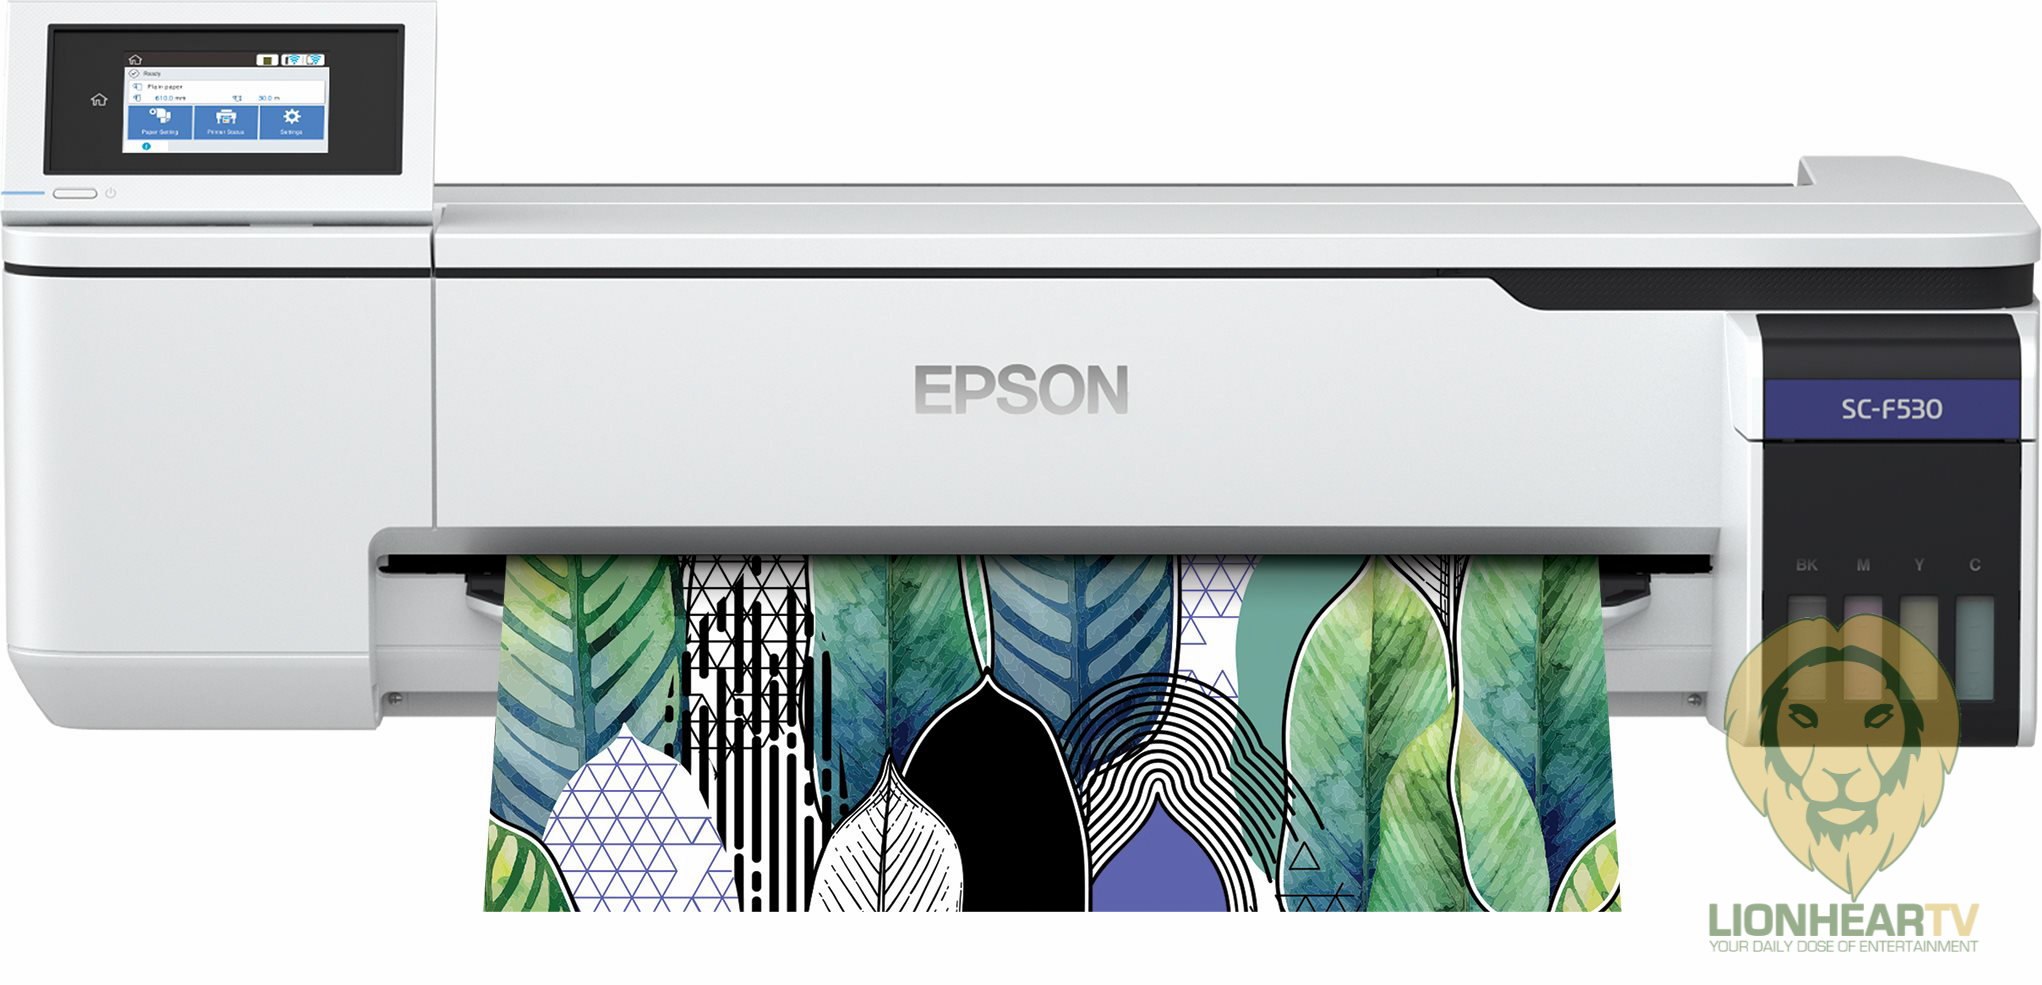 udbytte hjemmelevering Pædagogik 5 reasons why Epson's Easy-to-Use Digital Textile Printers are ideal for  building business start-ups - LionhearTV